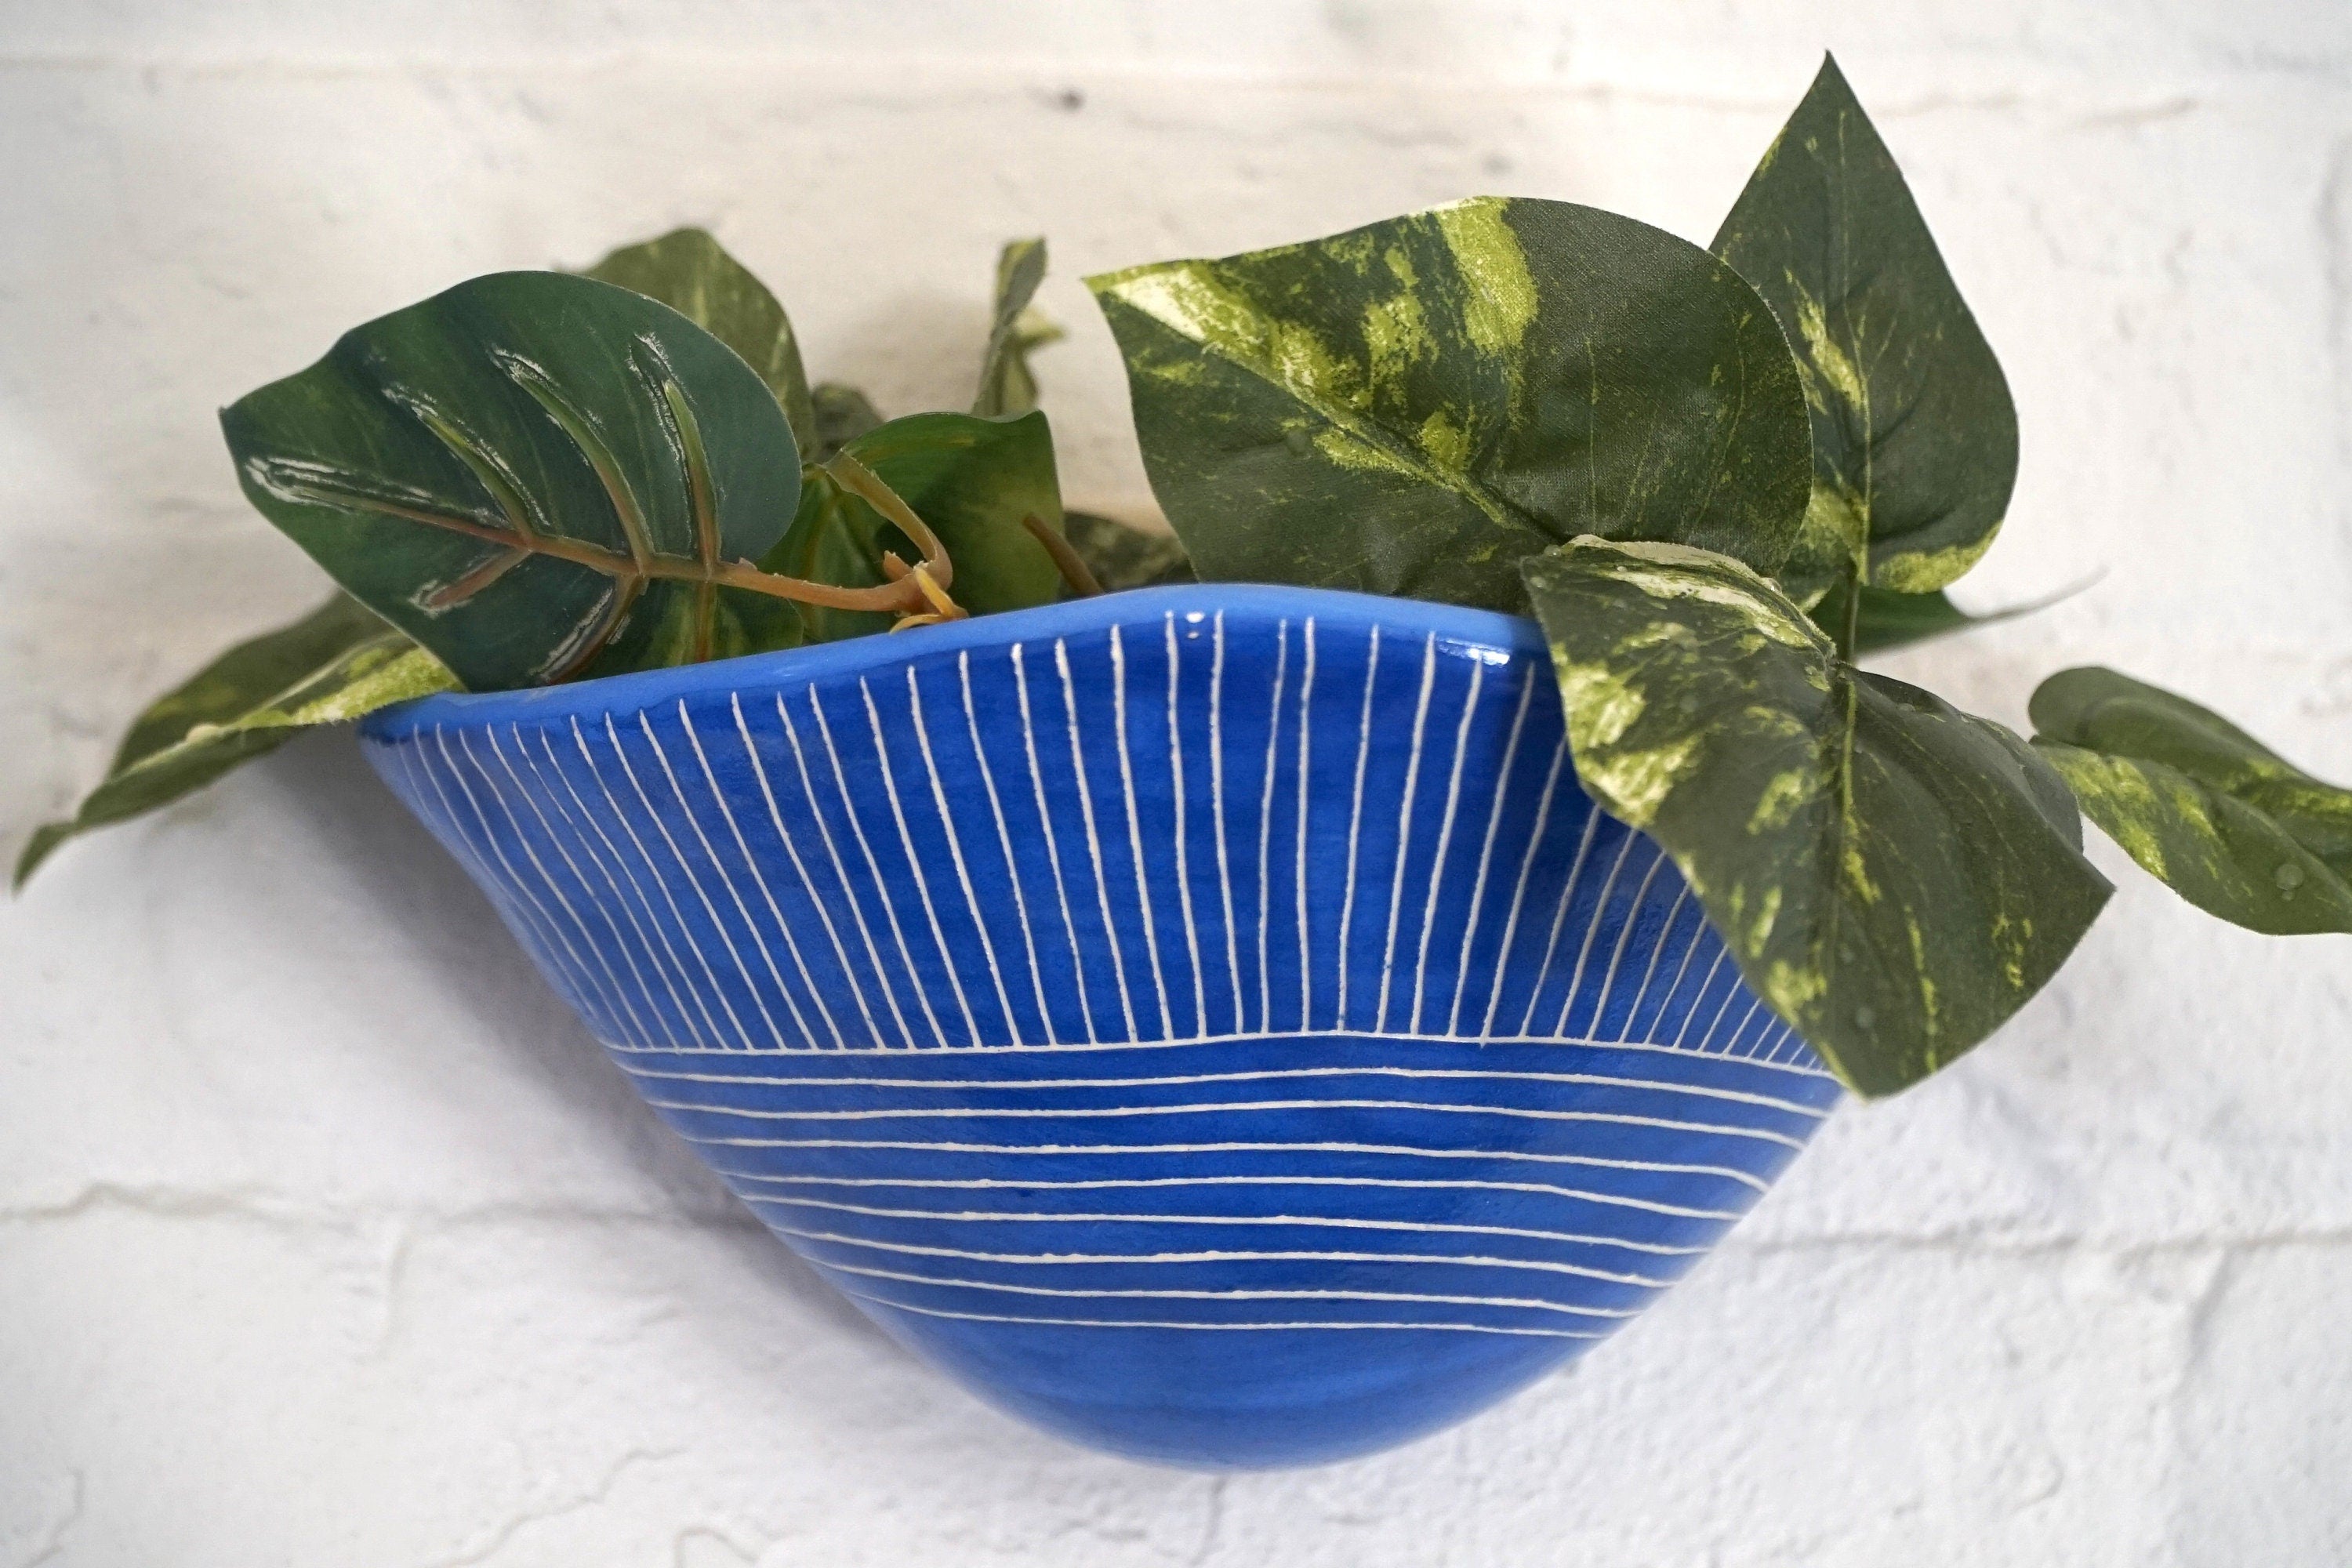 Blue & White Glazed Wall Pocket Planter w/ "Directional Line" Design - Ceramic Wall Planter - Pottery - Succulent Pot - Houseplant - Planter